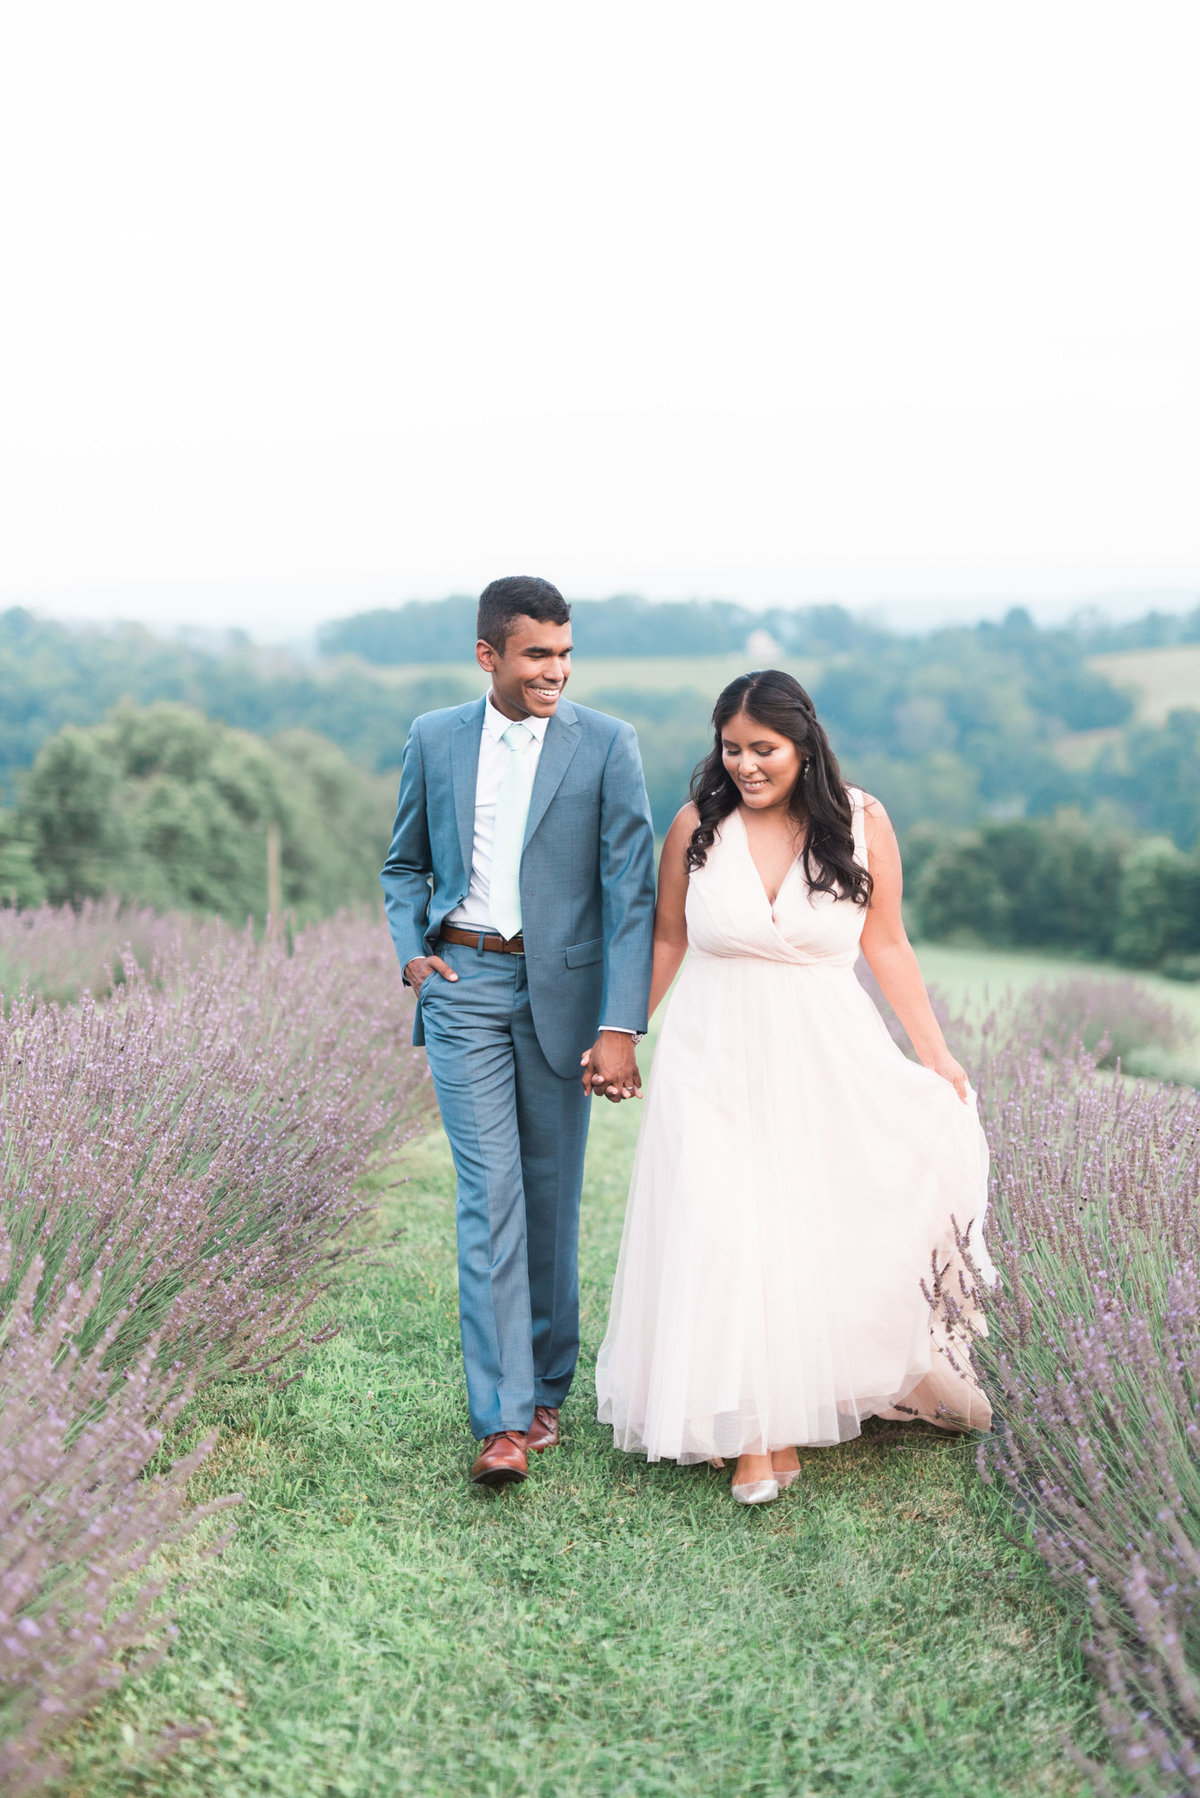 nj-wedding-photographer-hope-hill-lavender-farm-anniversary-session-photo-009